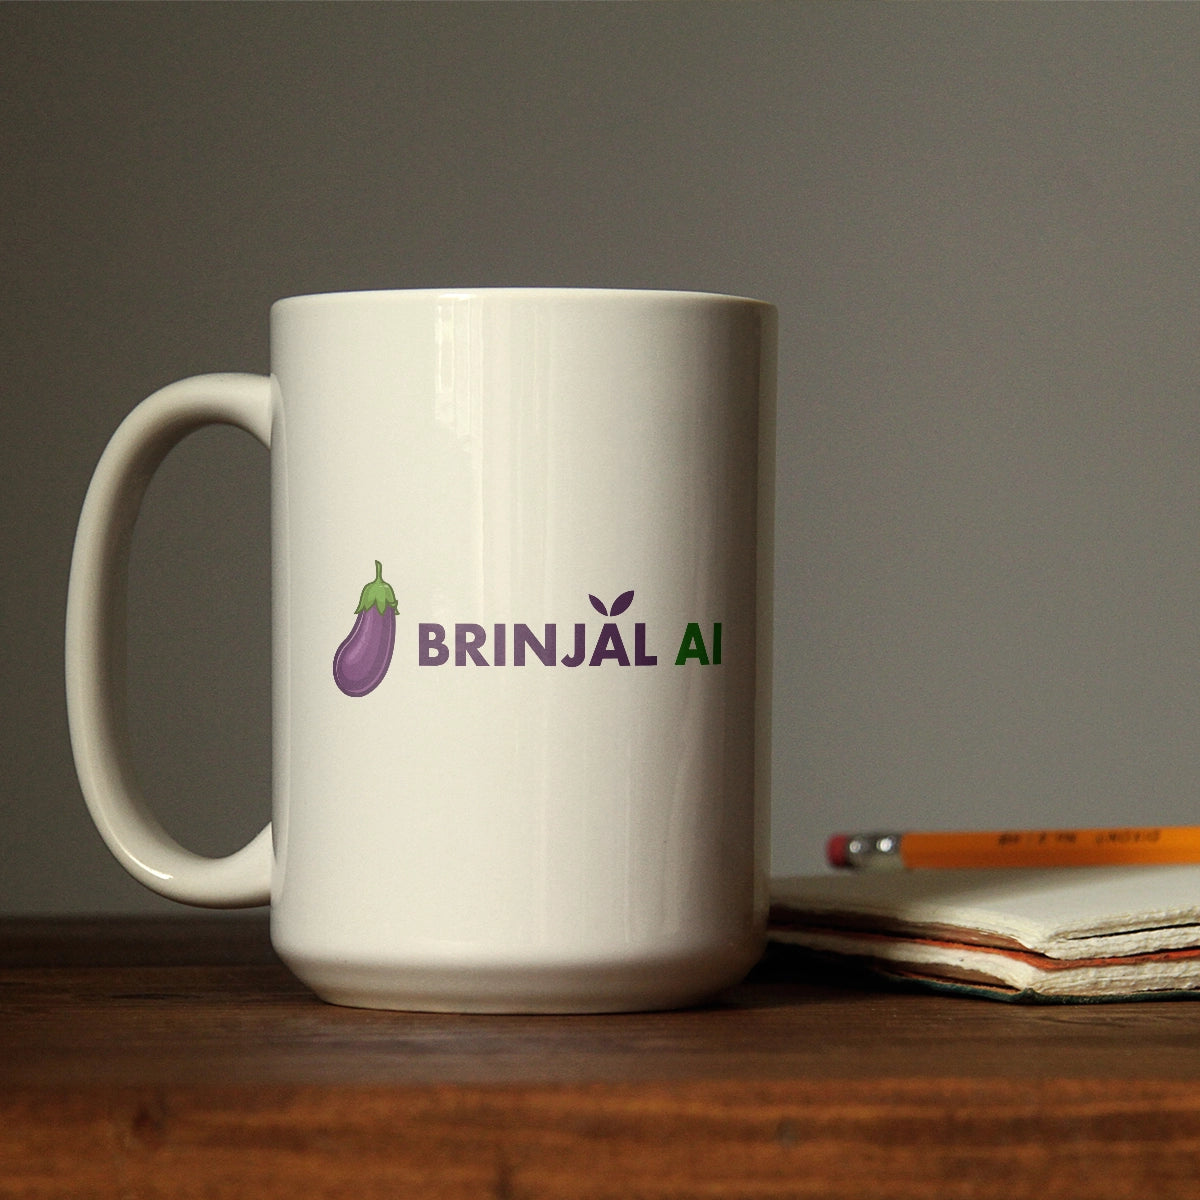 BrinjalAI.com